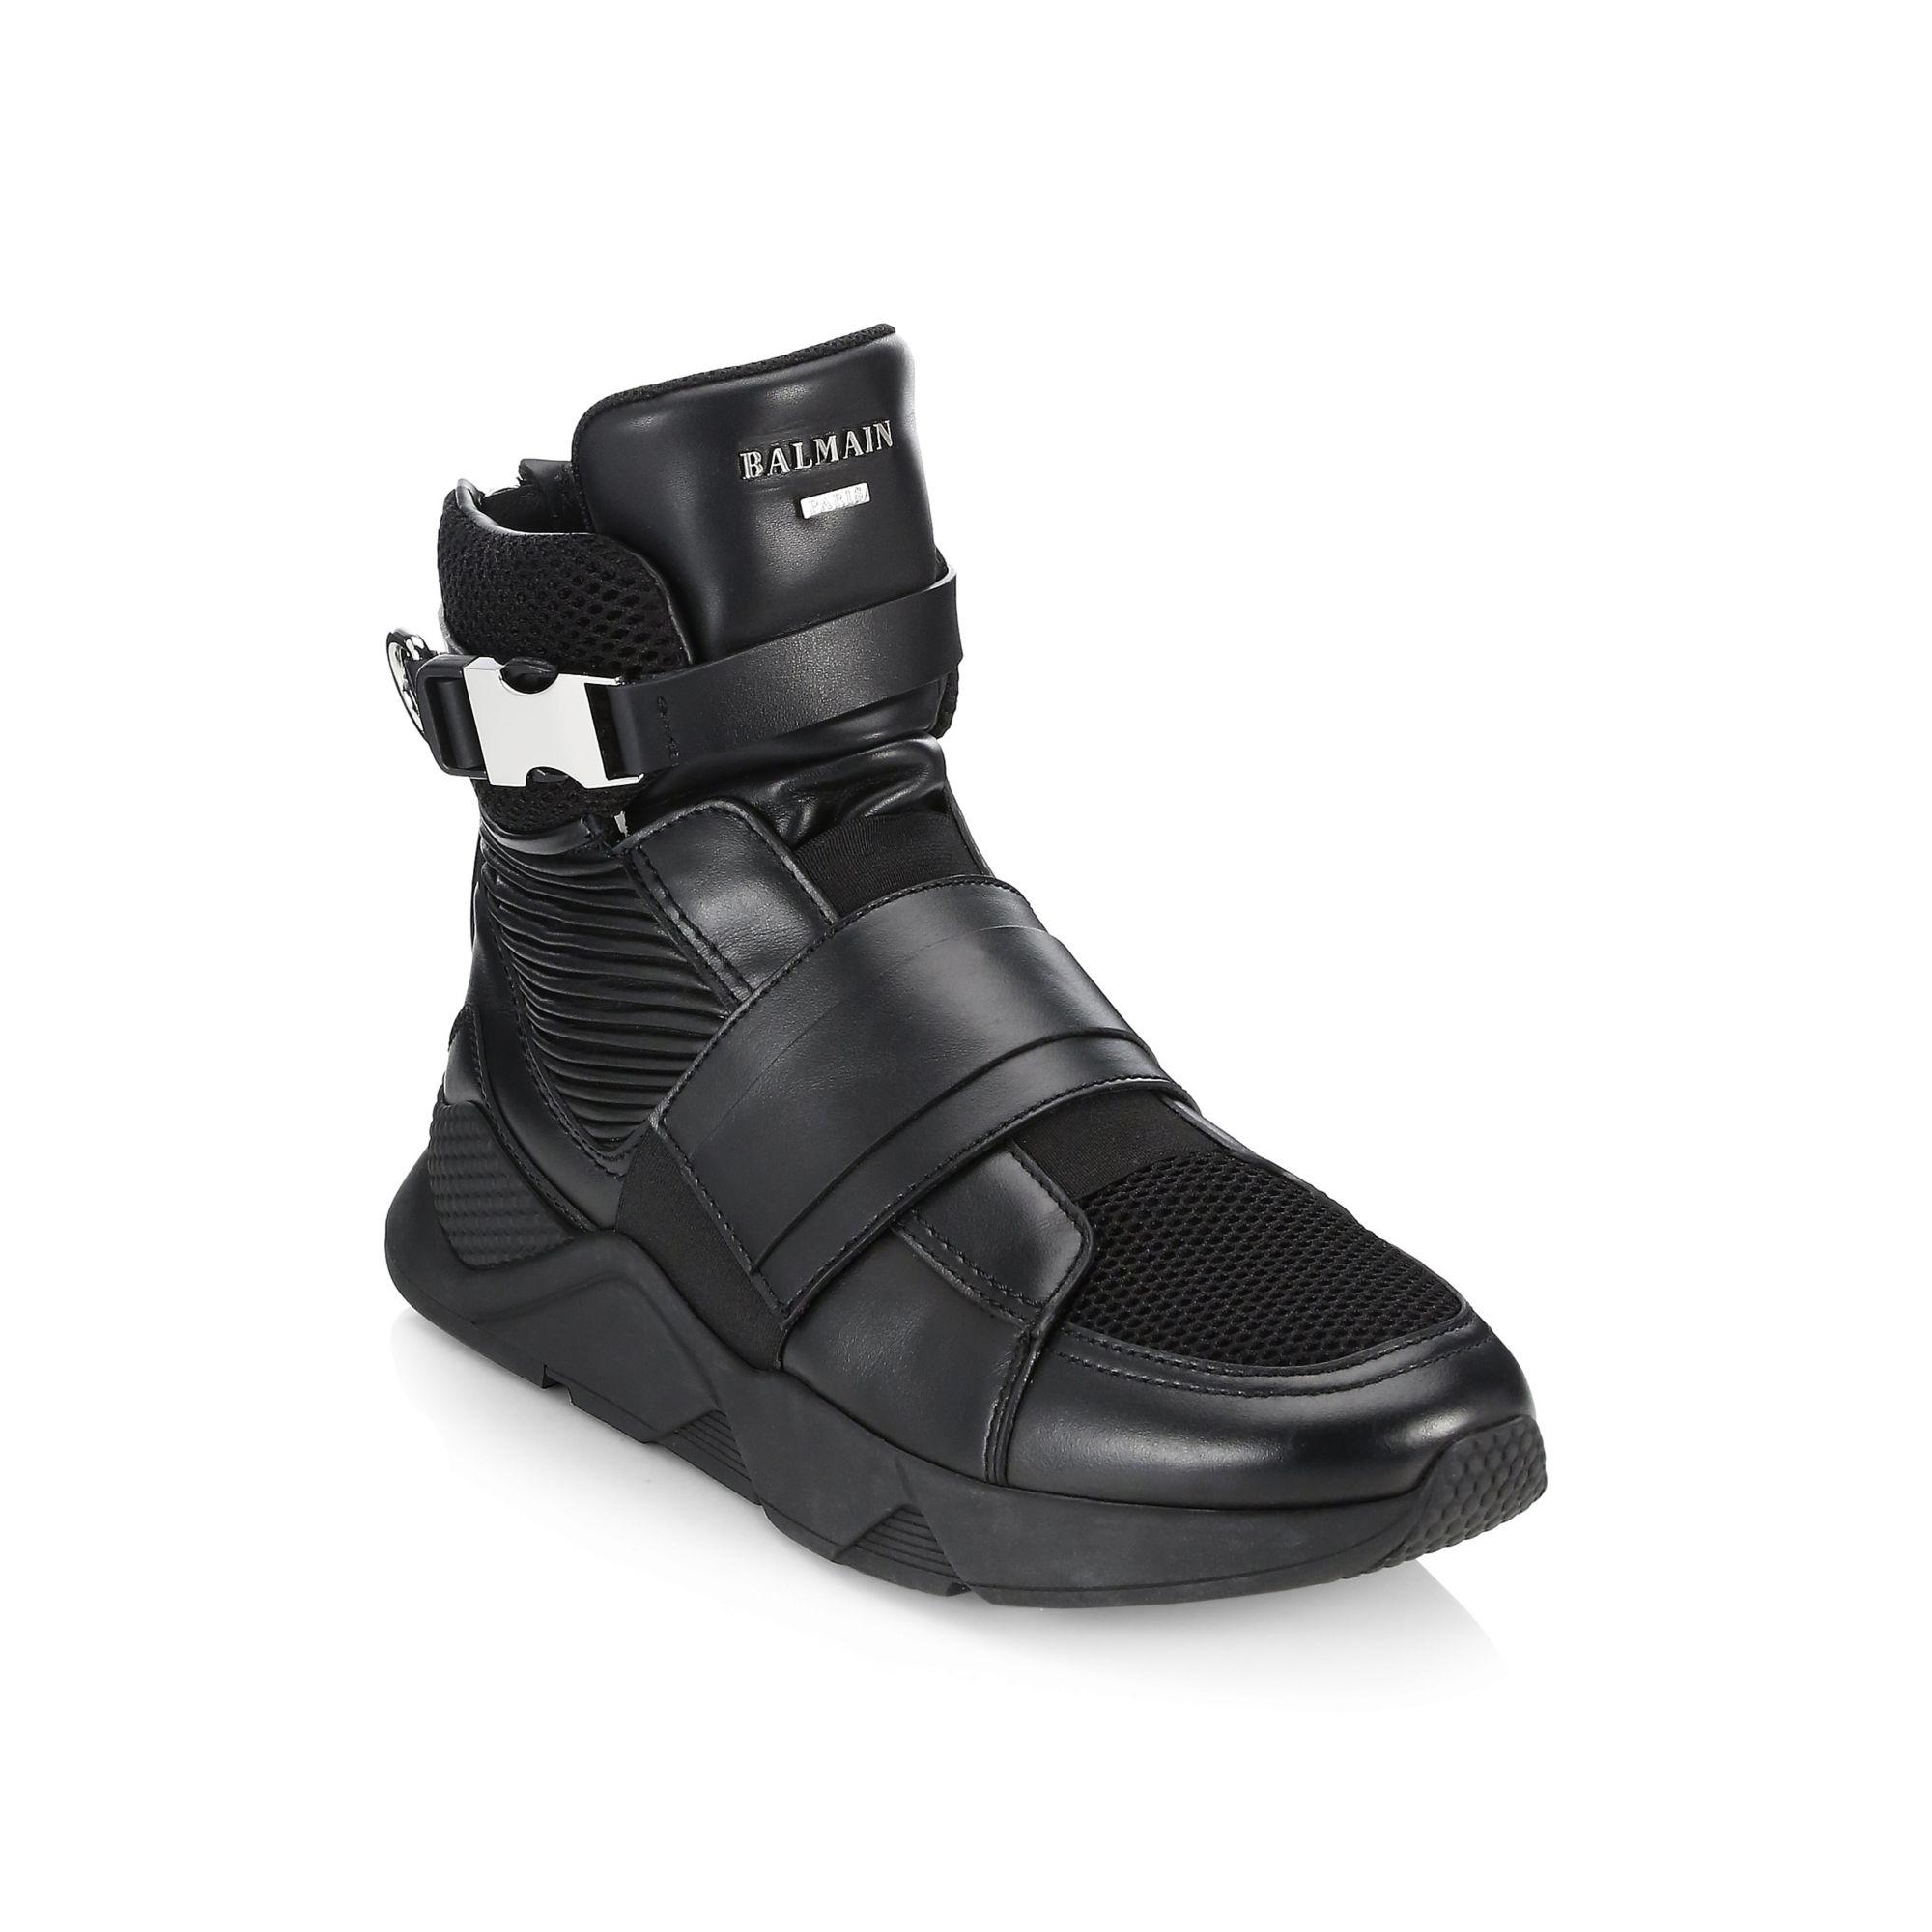 Balmain Leather Logo High-top Sneakers in Black for Men - Lyst